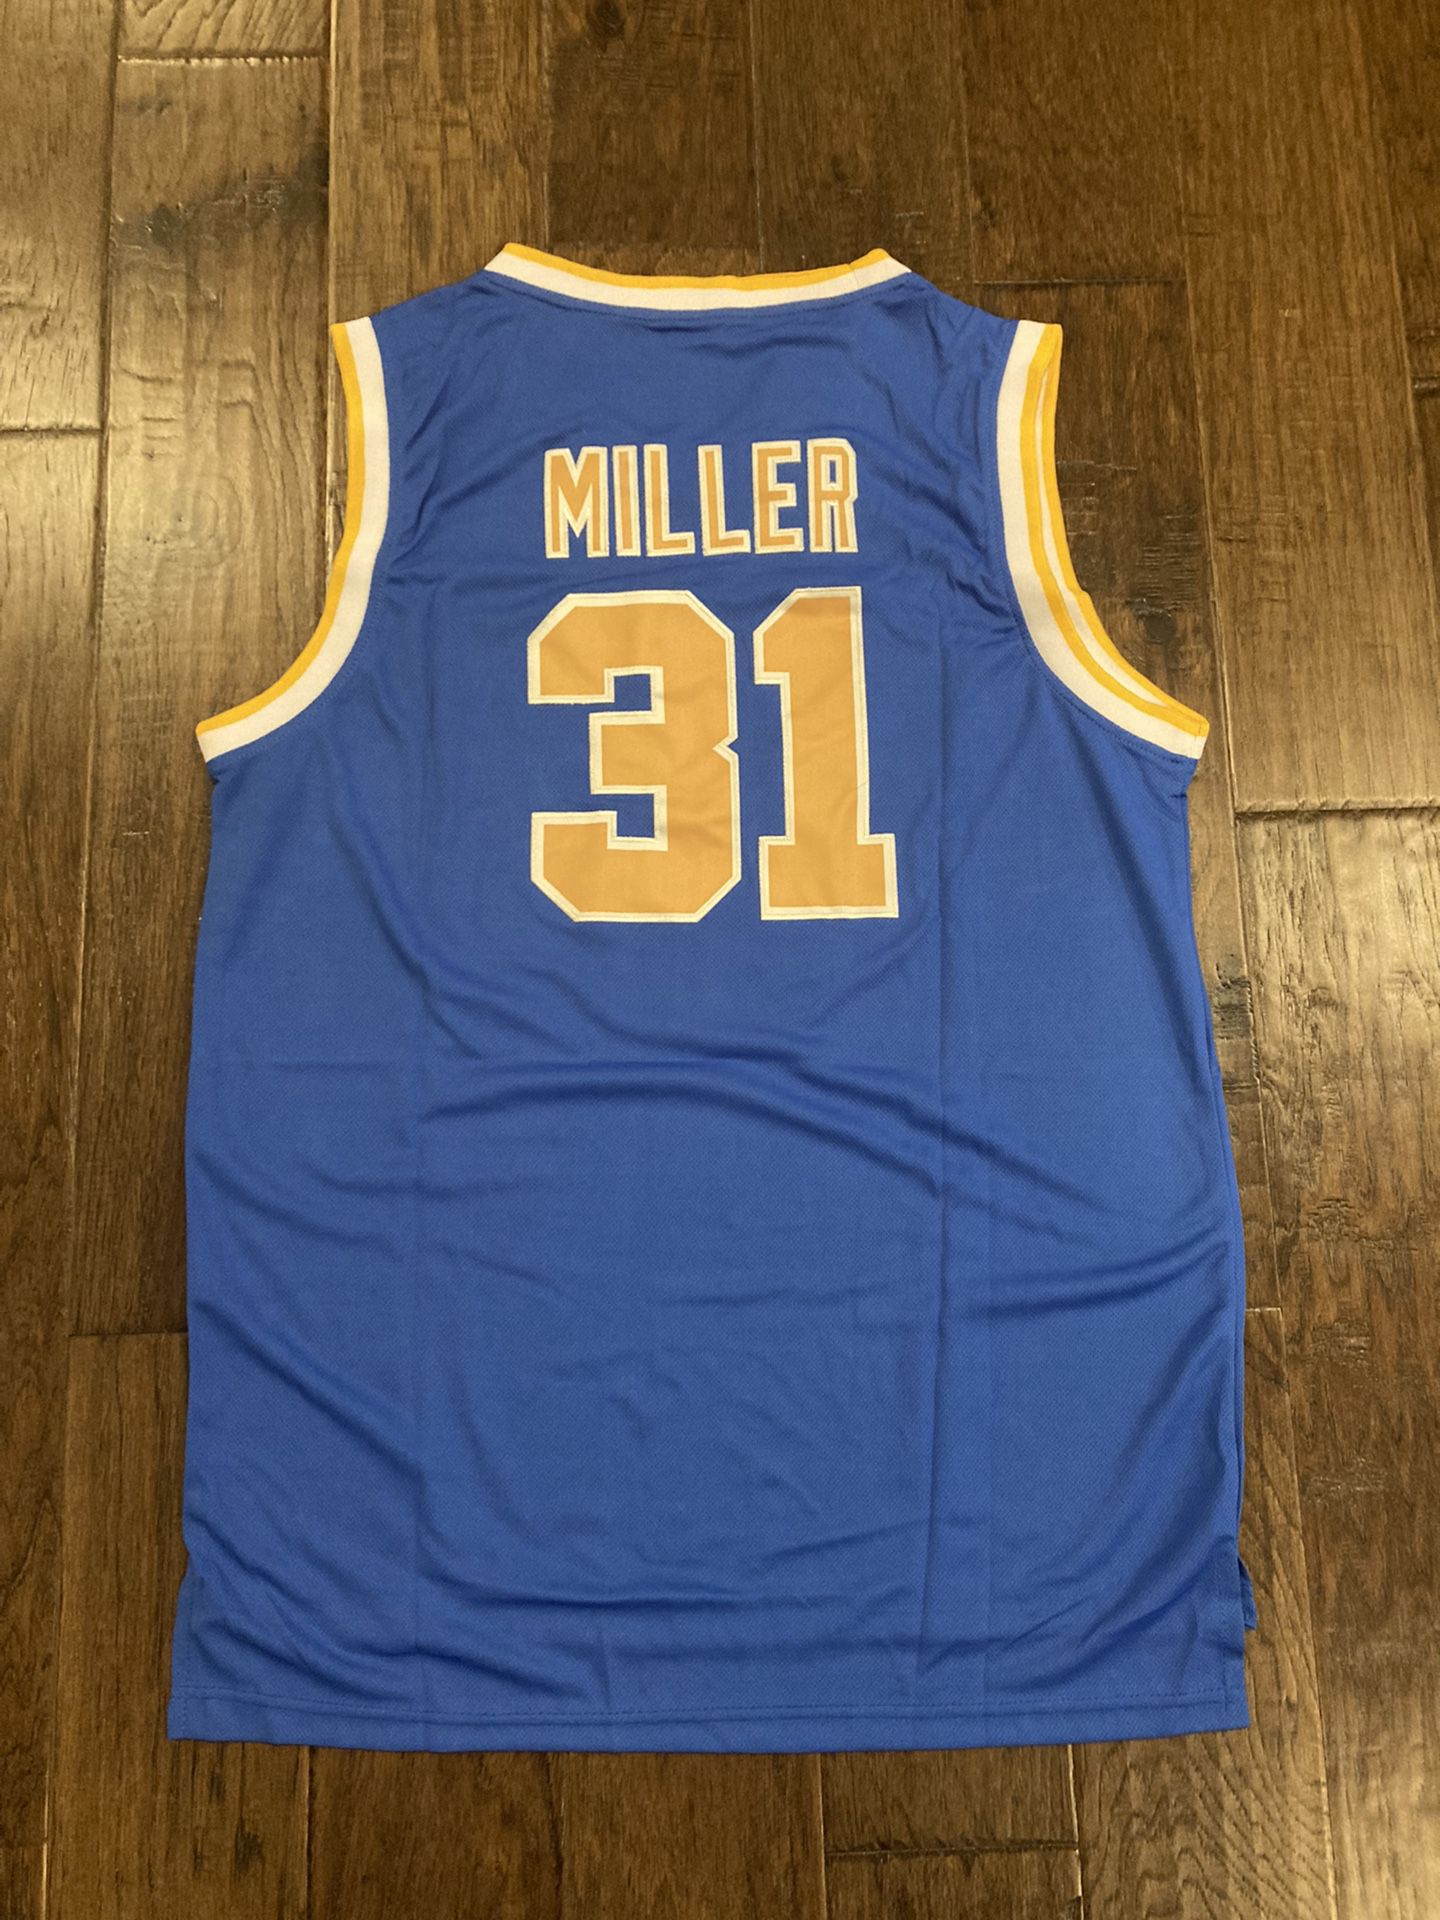 Reggie Miller UCLA Bruins Basketball Jersey Large